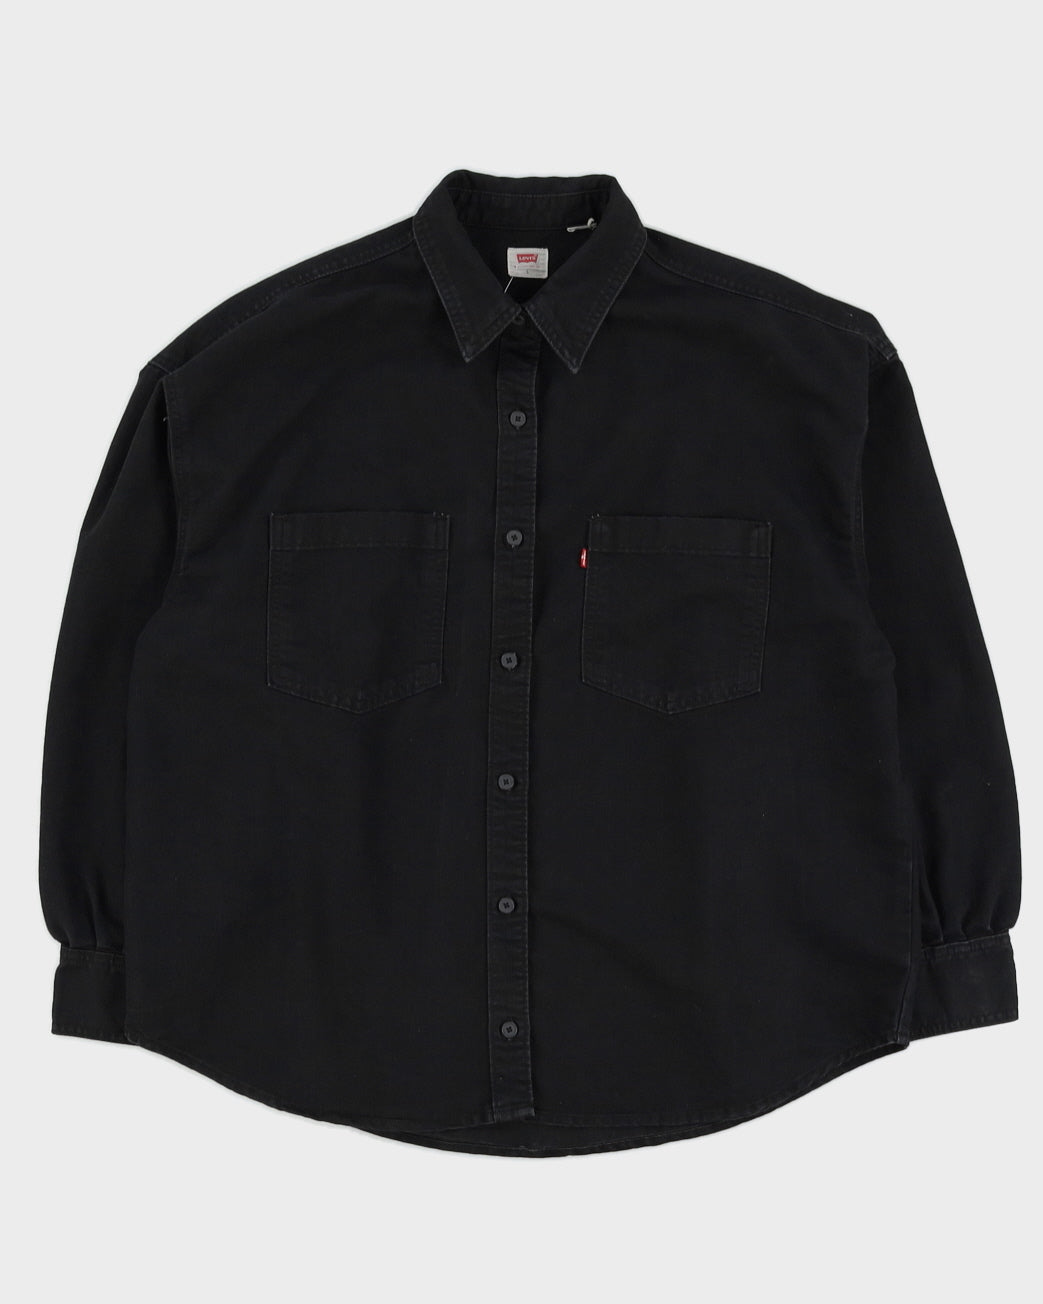 Levi's Black Denim Shirt - XXXL